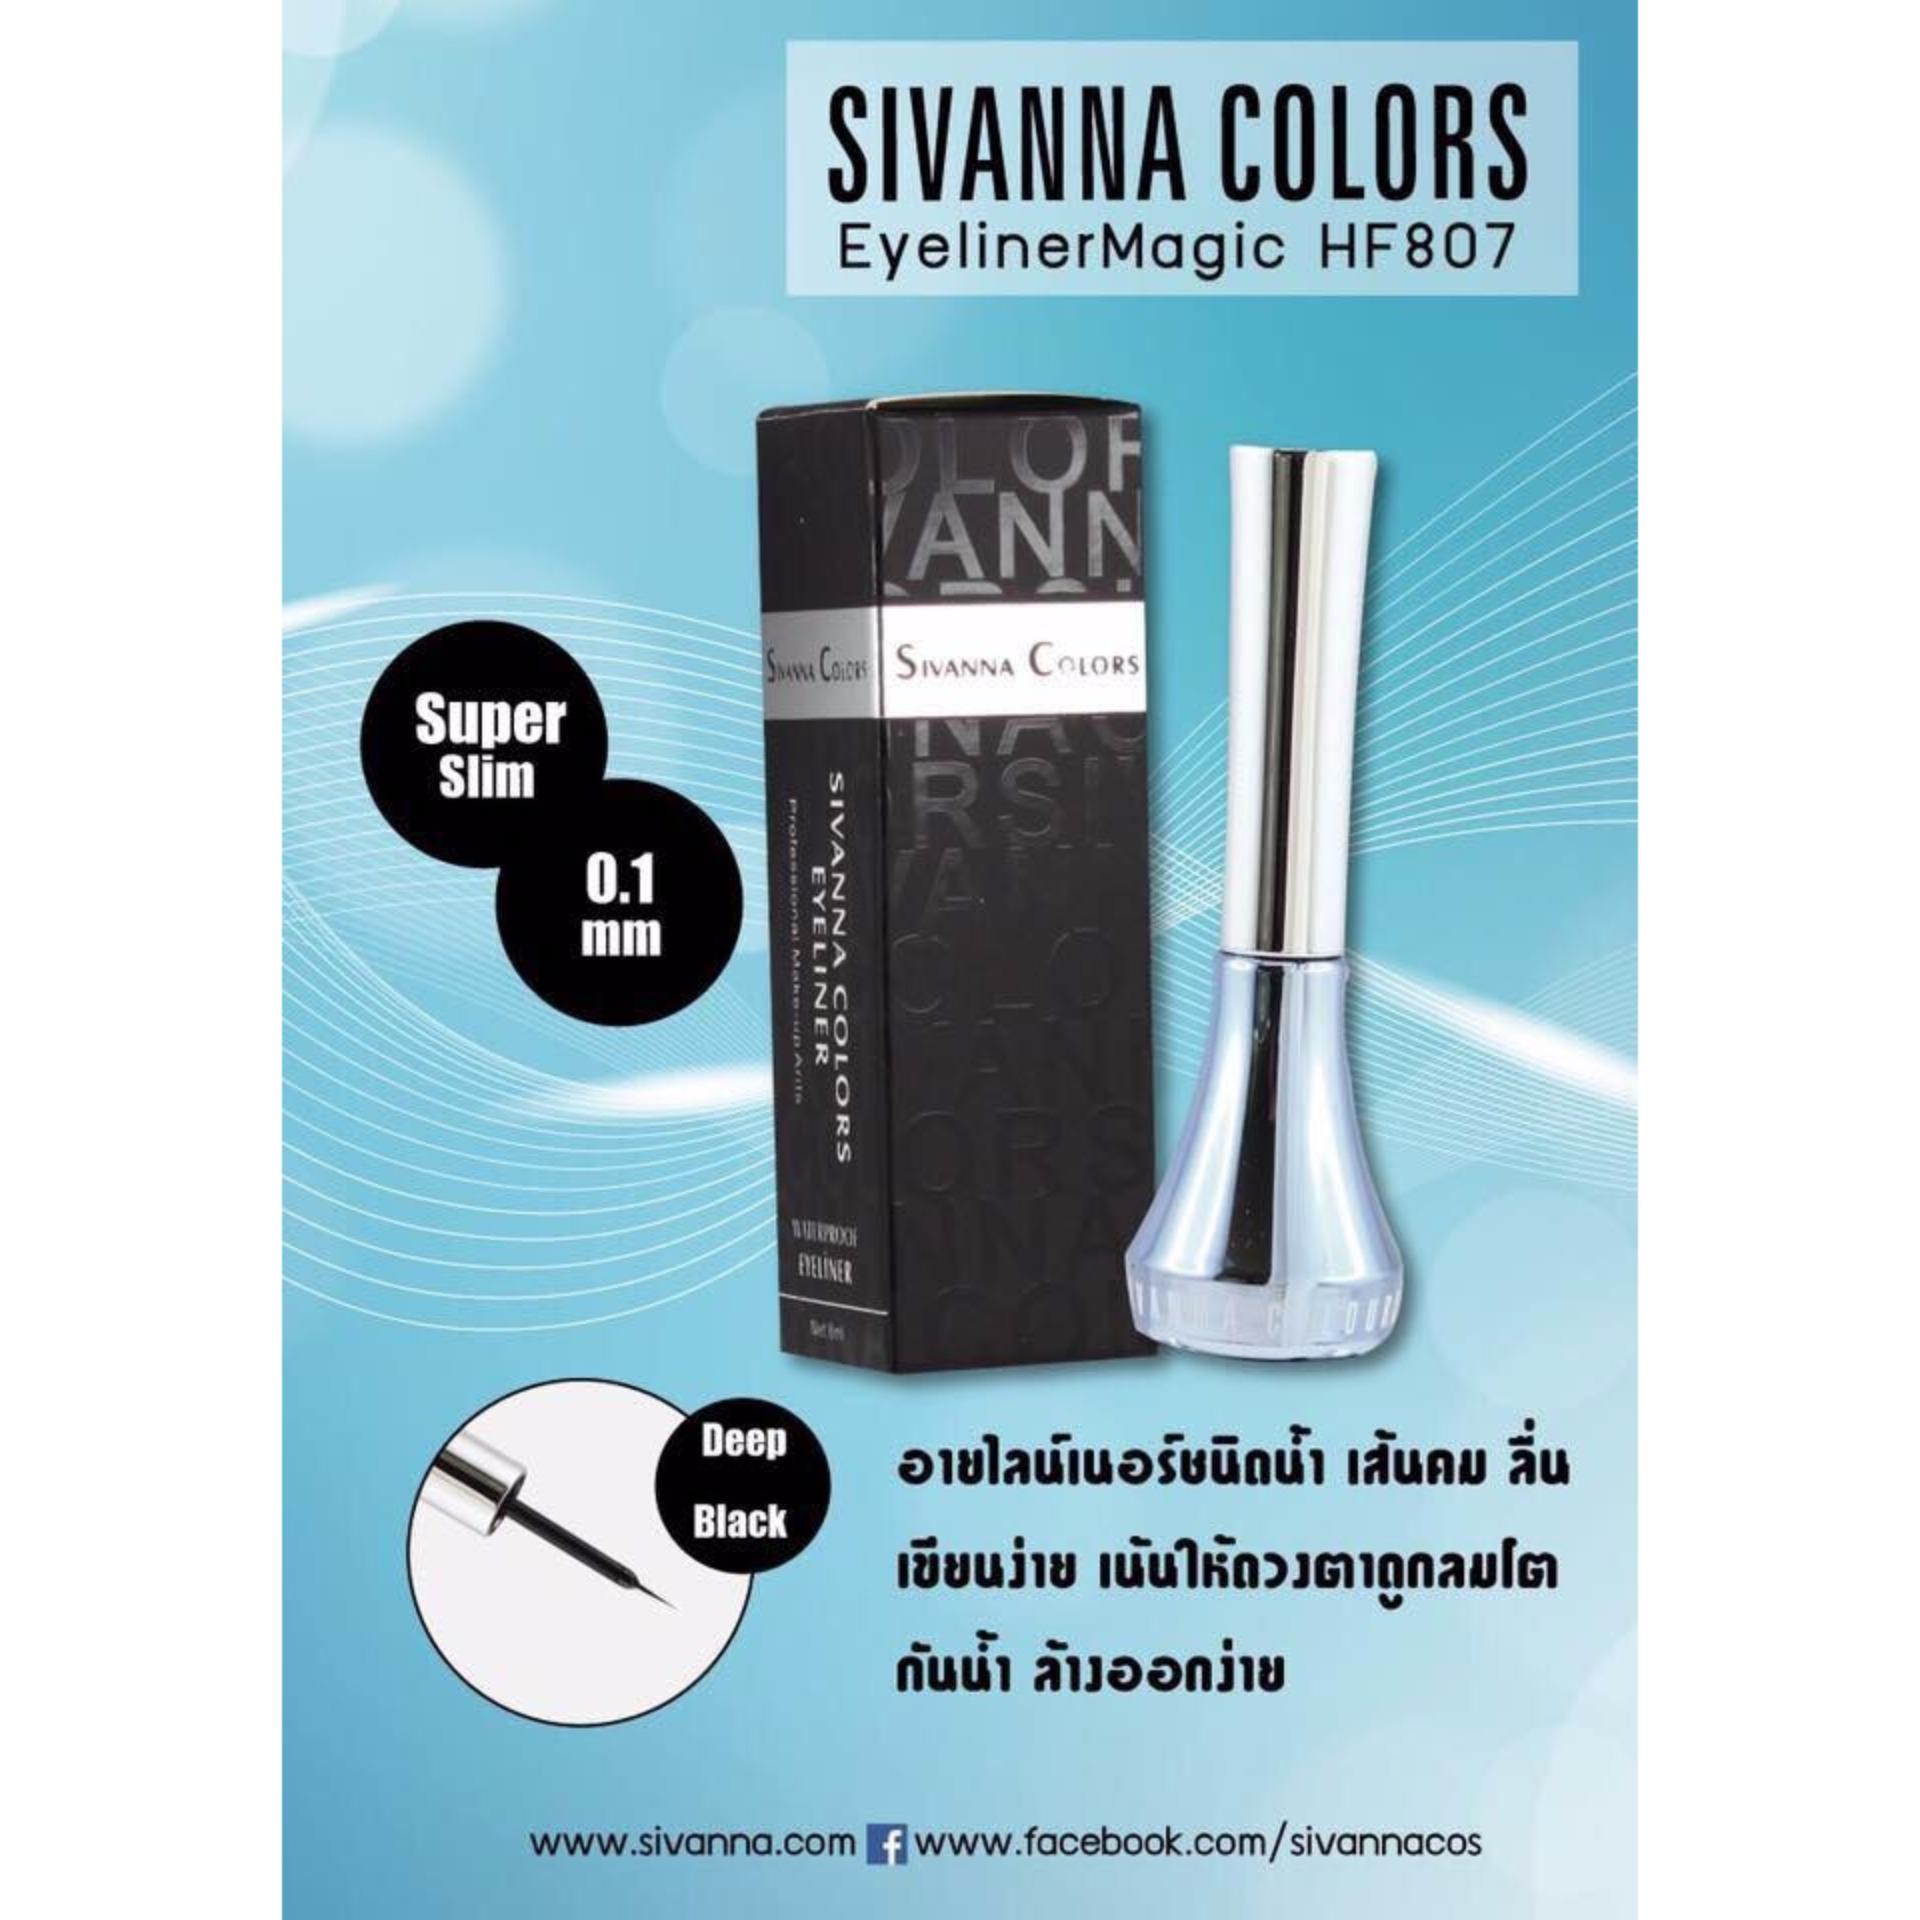 HF807 (กล่องดำ)อายไลเนอร์ชนิดน้ำ หัวเล็กเรียวแหลม Sivanna Colors Eyeliner Magic Super Slim 0.1mm เขียนง่าย